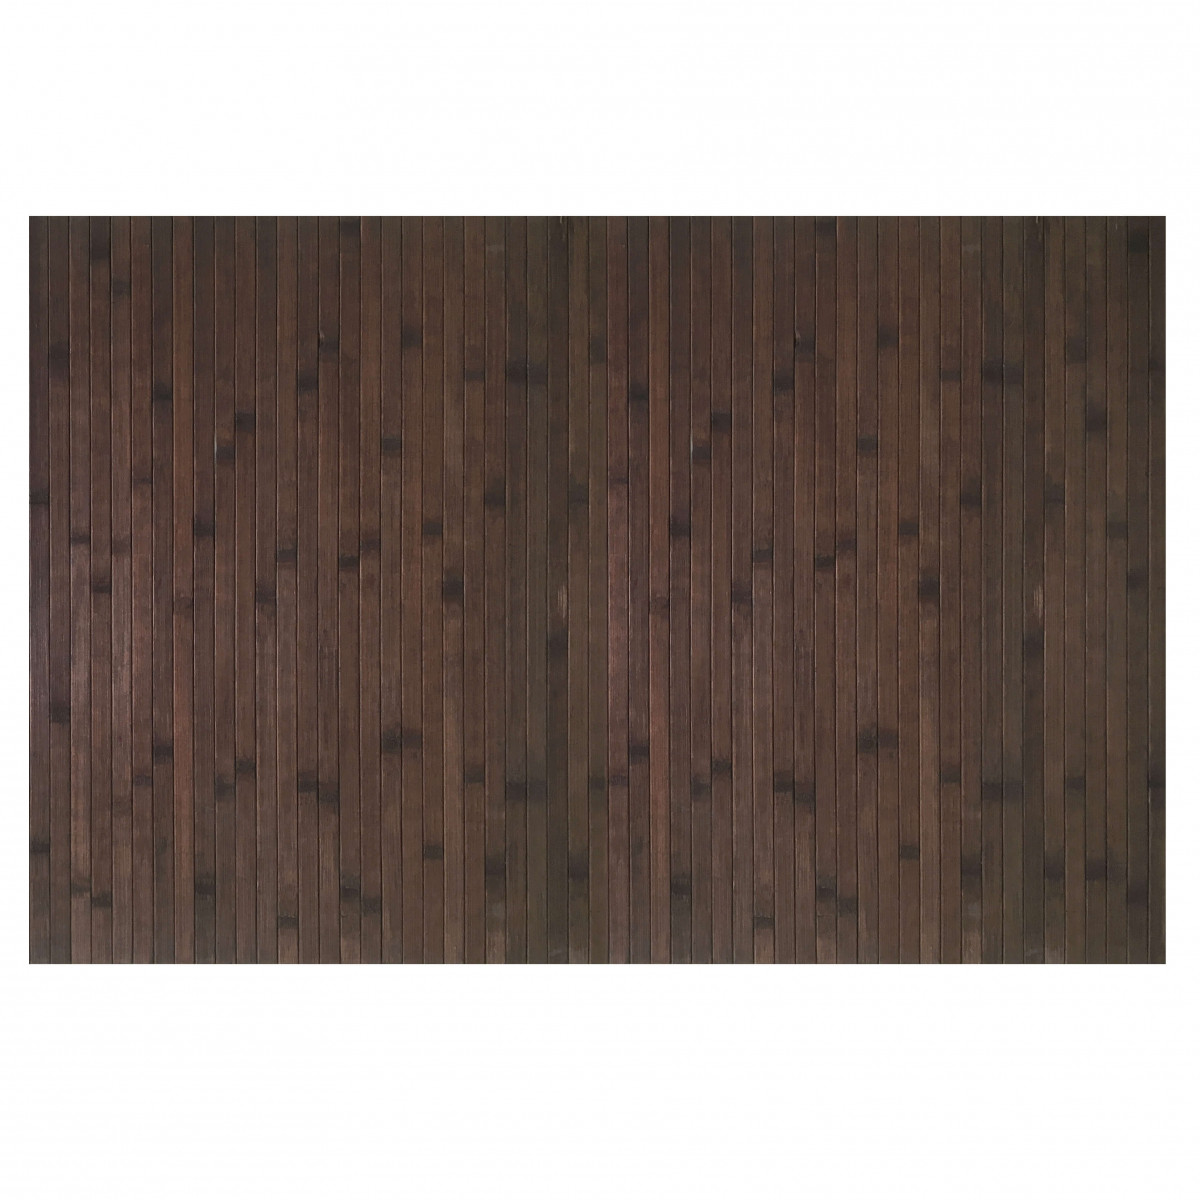 Tapis bambou noyer - couleur : Marron - taille : 200 x 300 cm